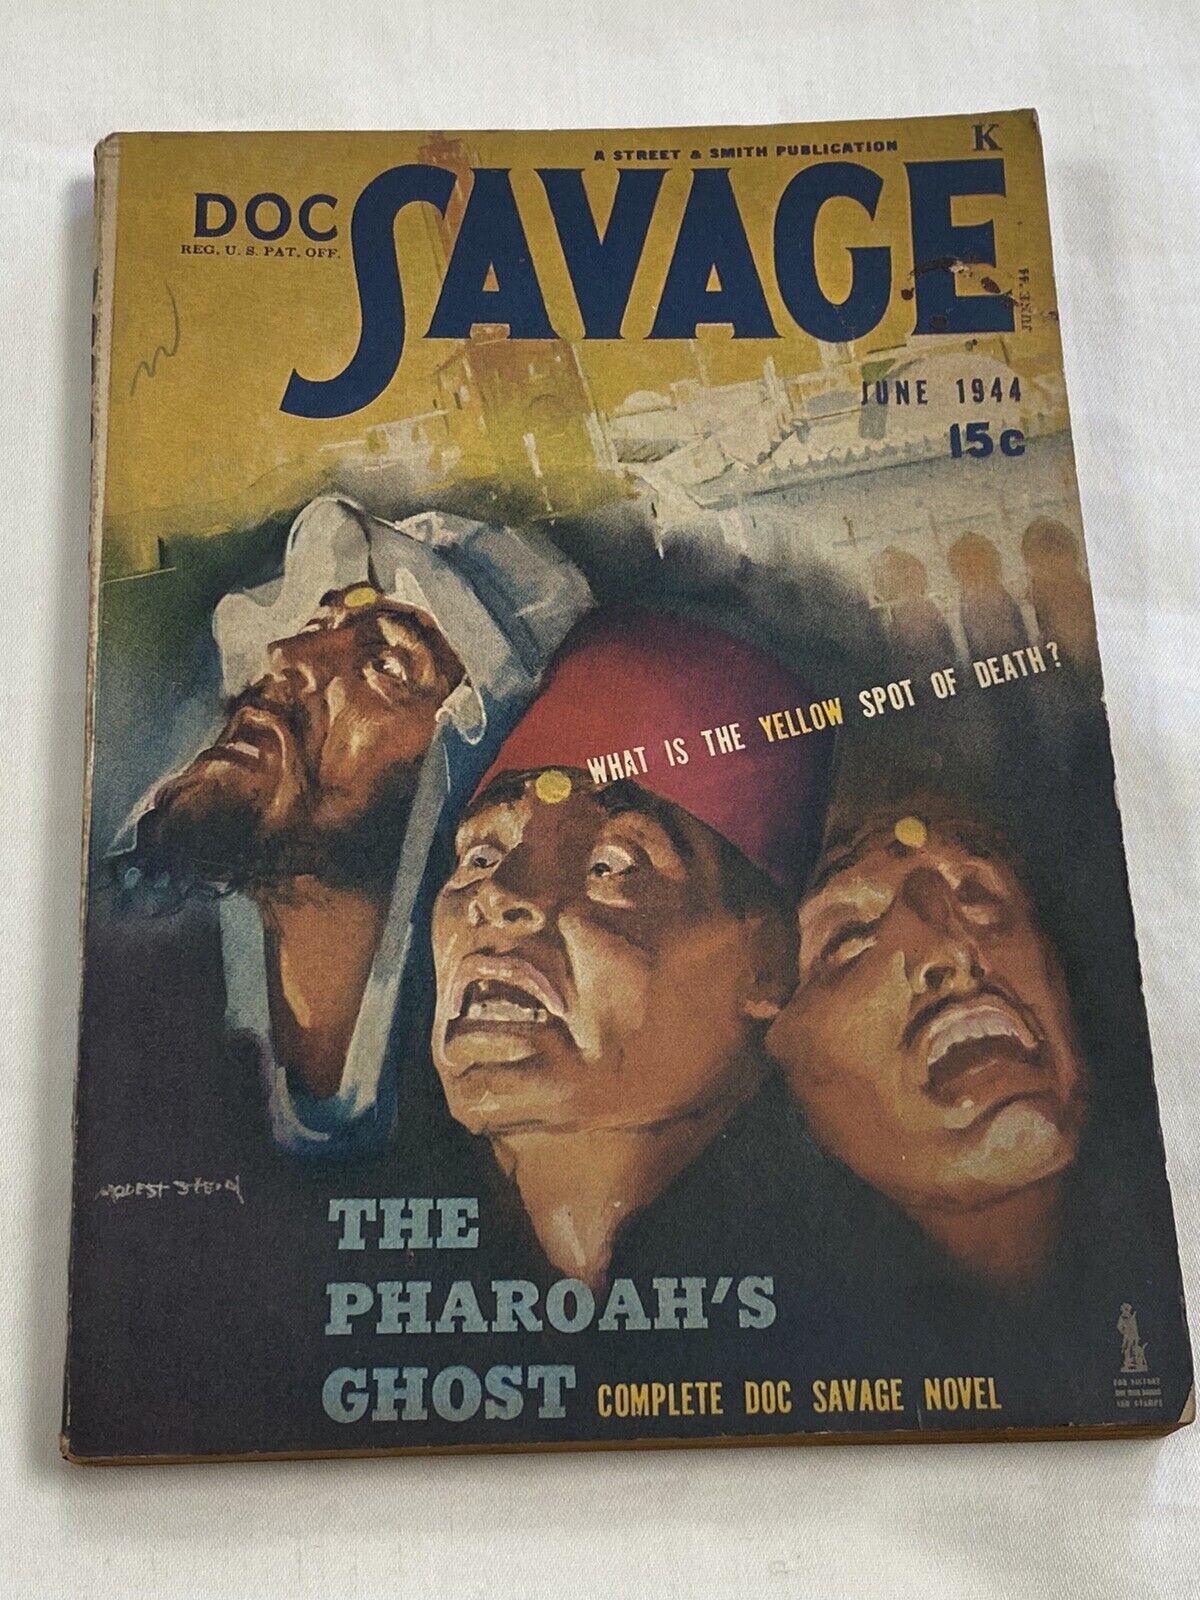 Original Doc Savage June 1944 Pulp Magazine “The Pharaohs Ghost” Volume 23 # 4